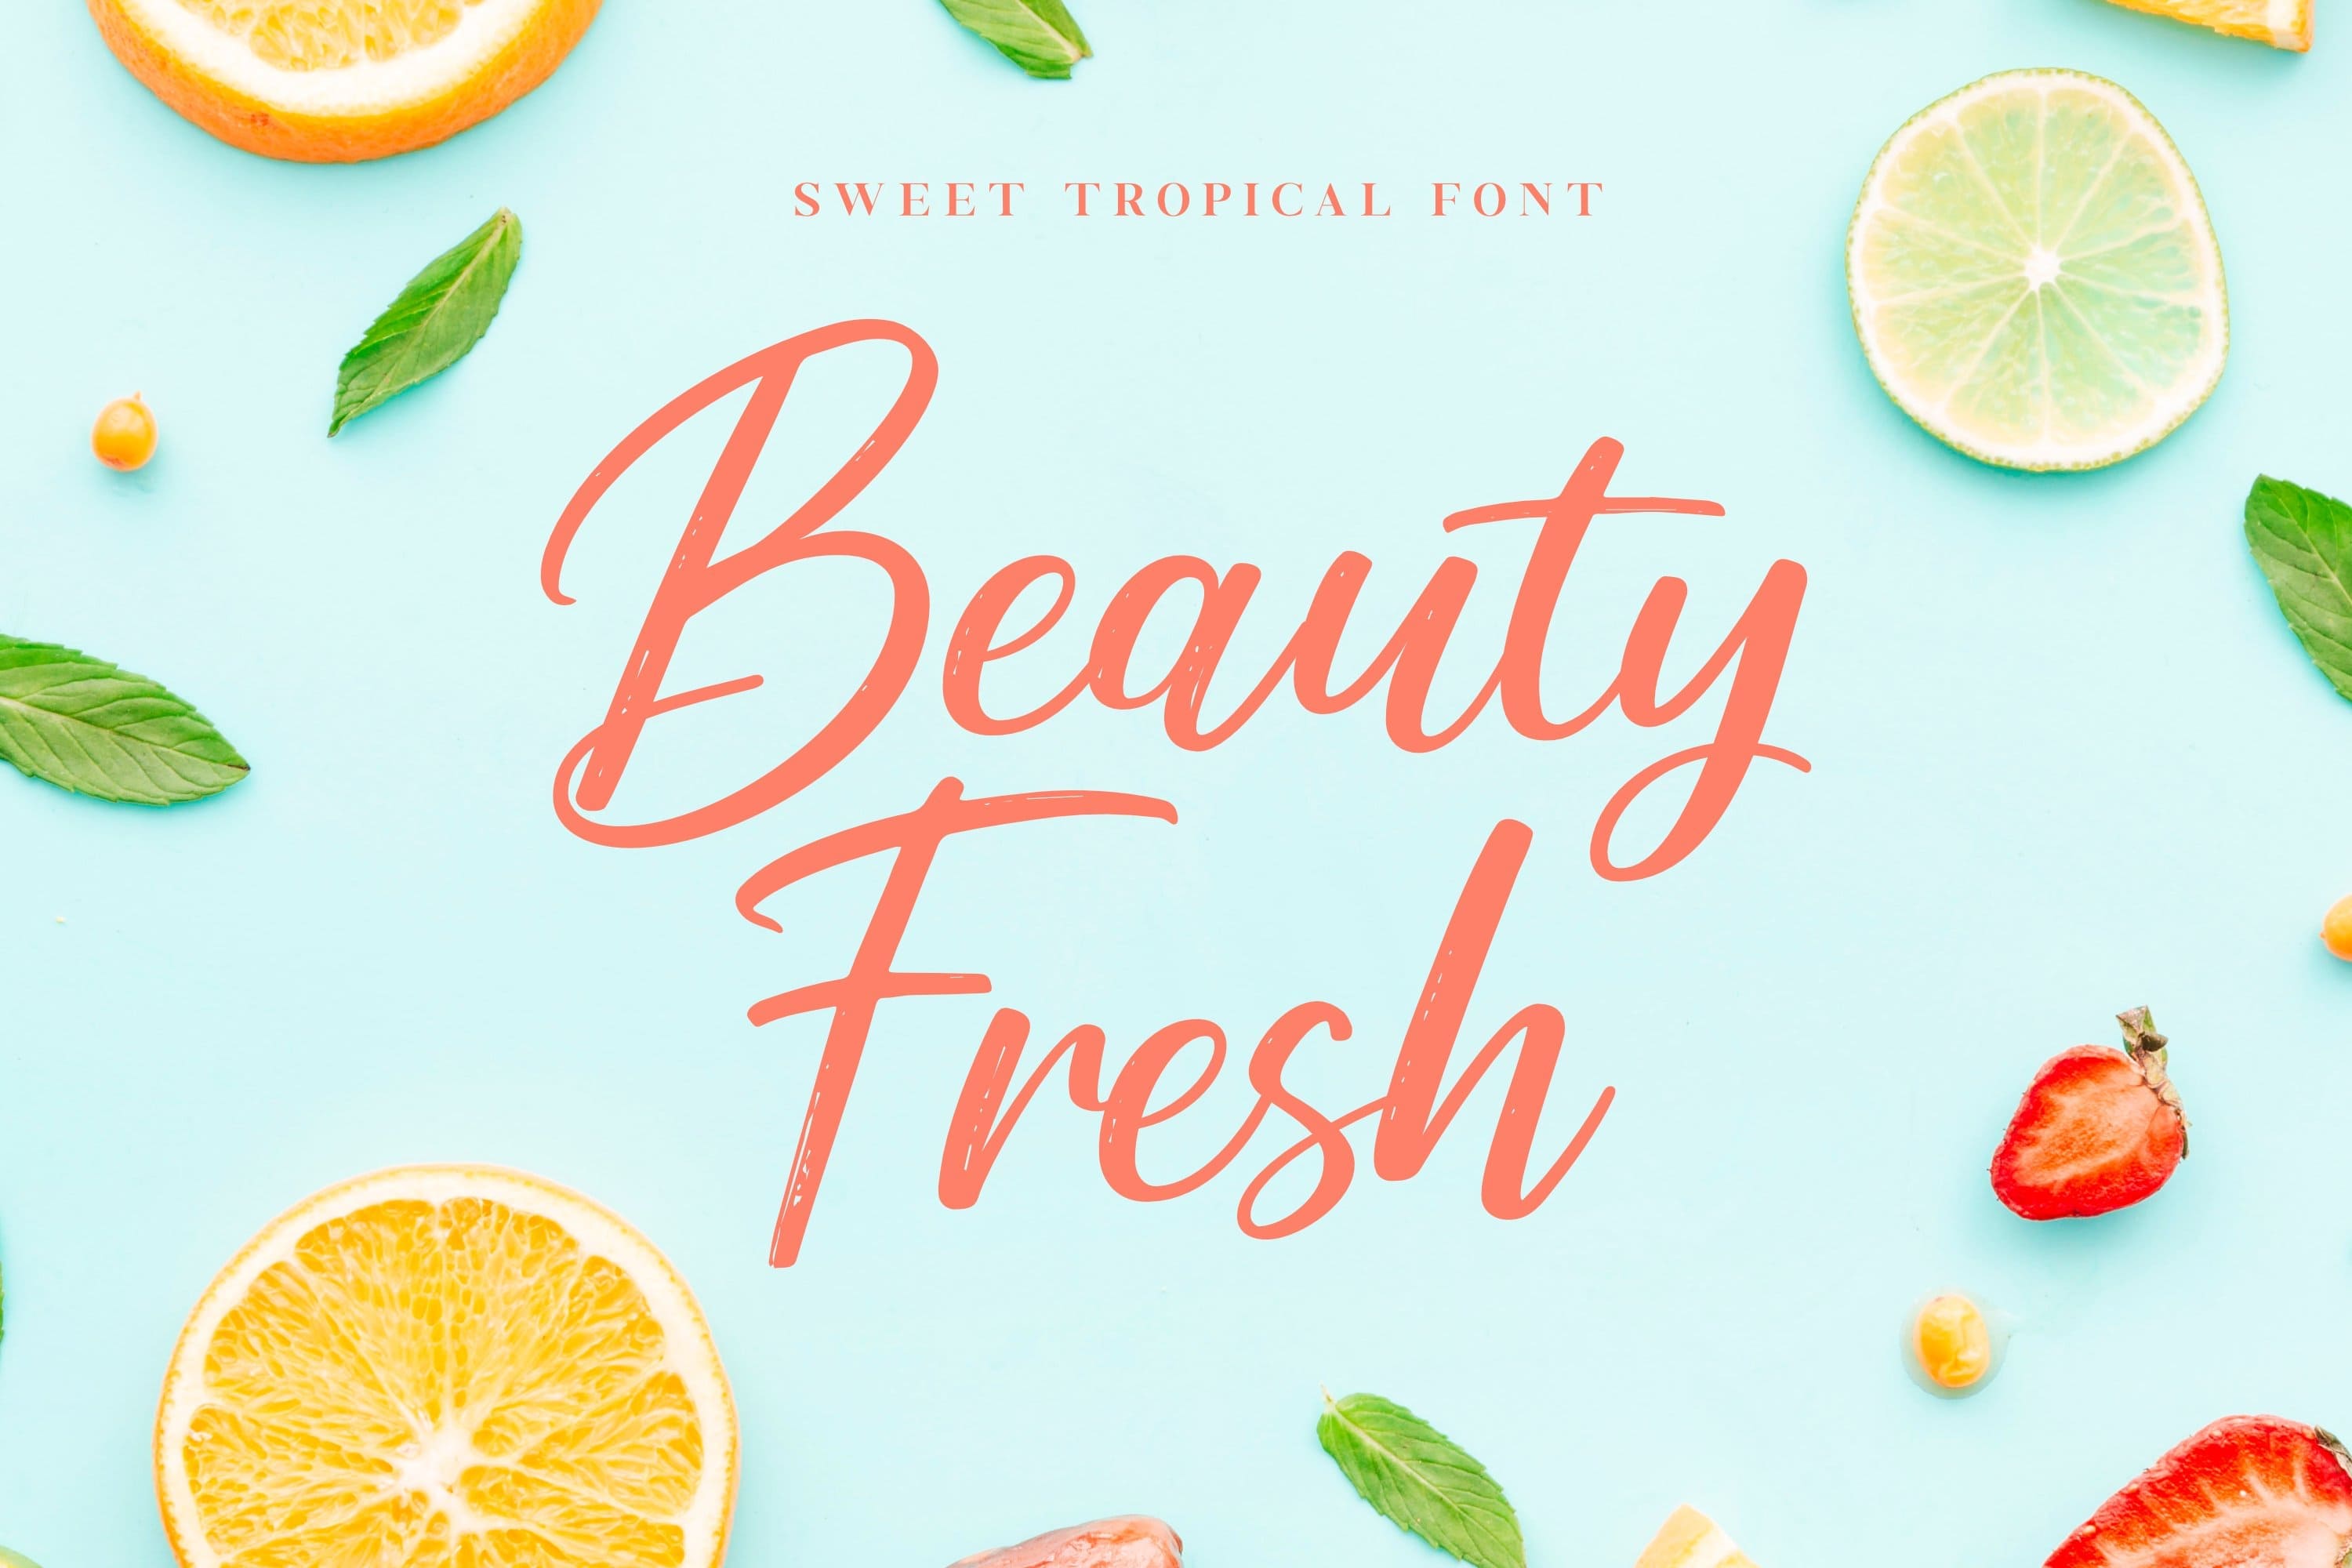 Sweet Tropical font - Beauty Fresh.